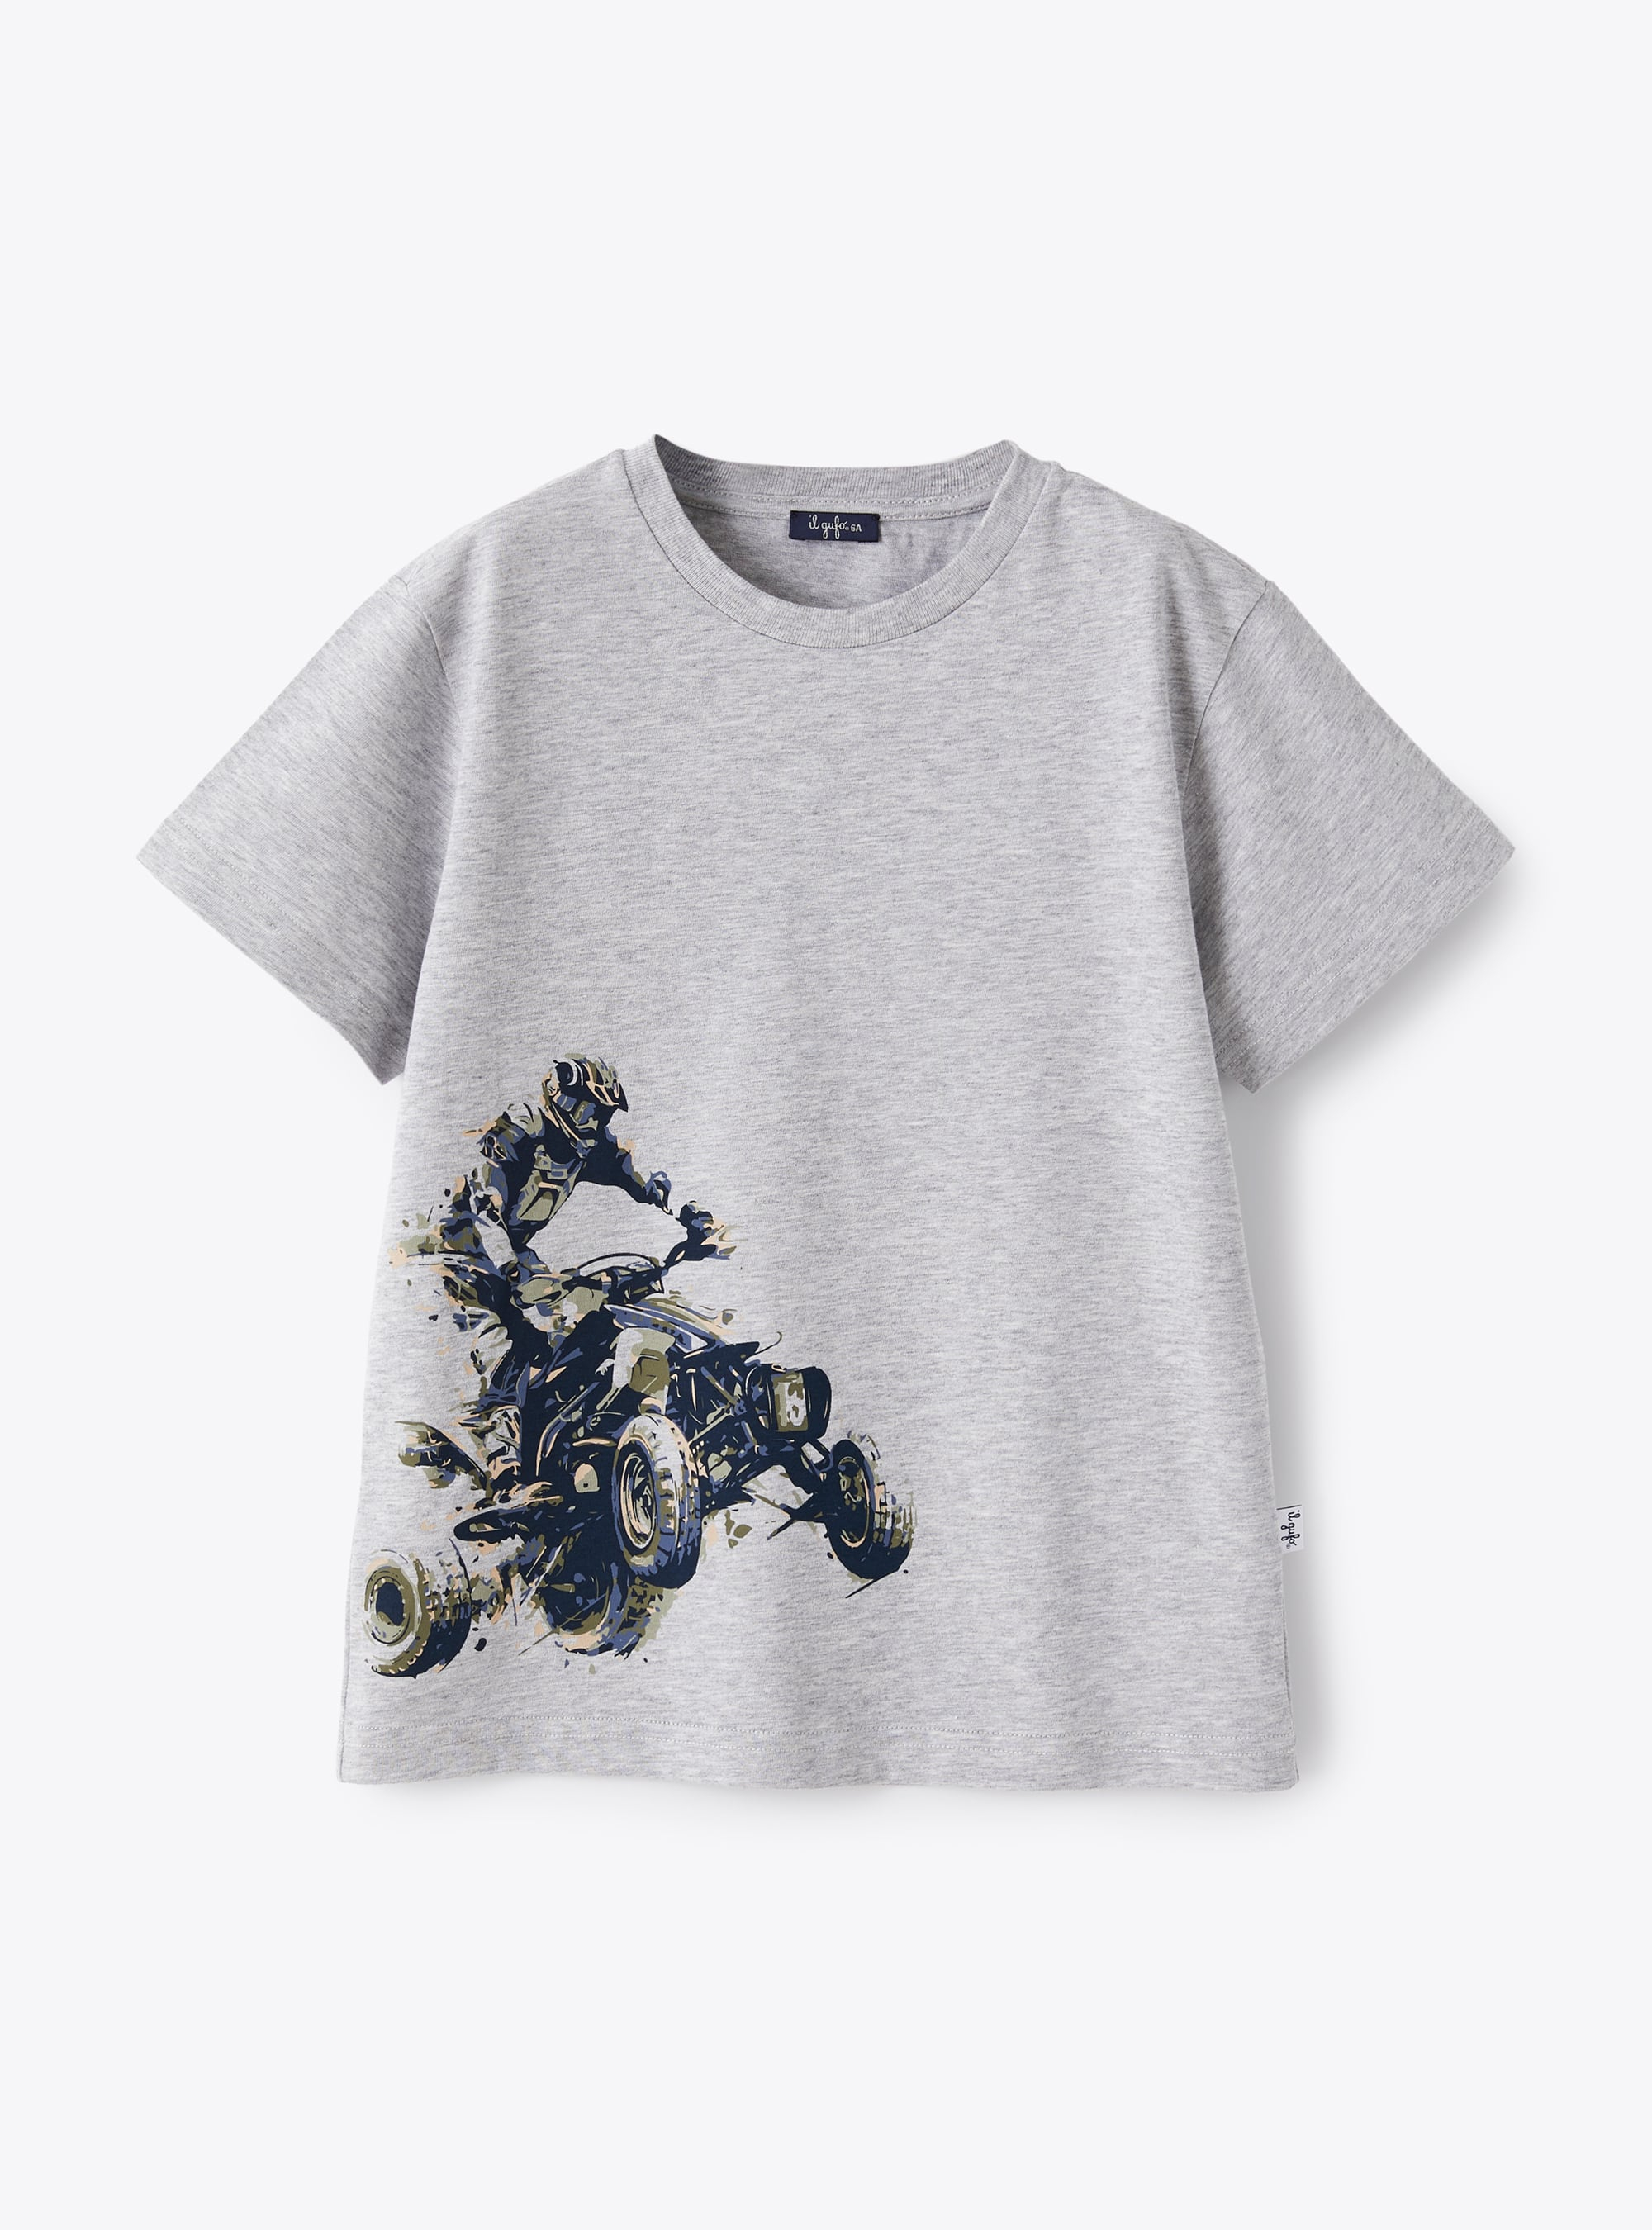 Jersey t-shirt with quad bike print in grey - Grey | Il Gufo